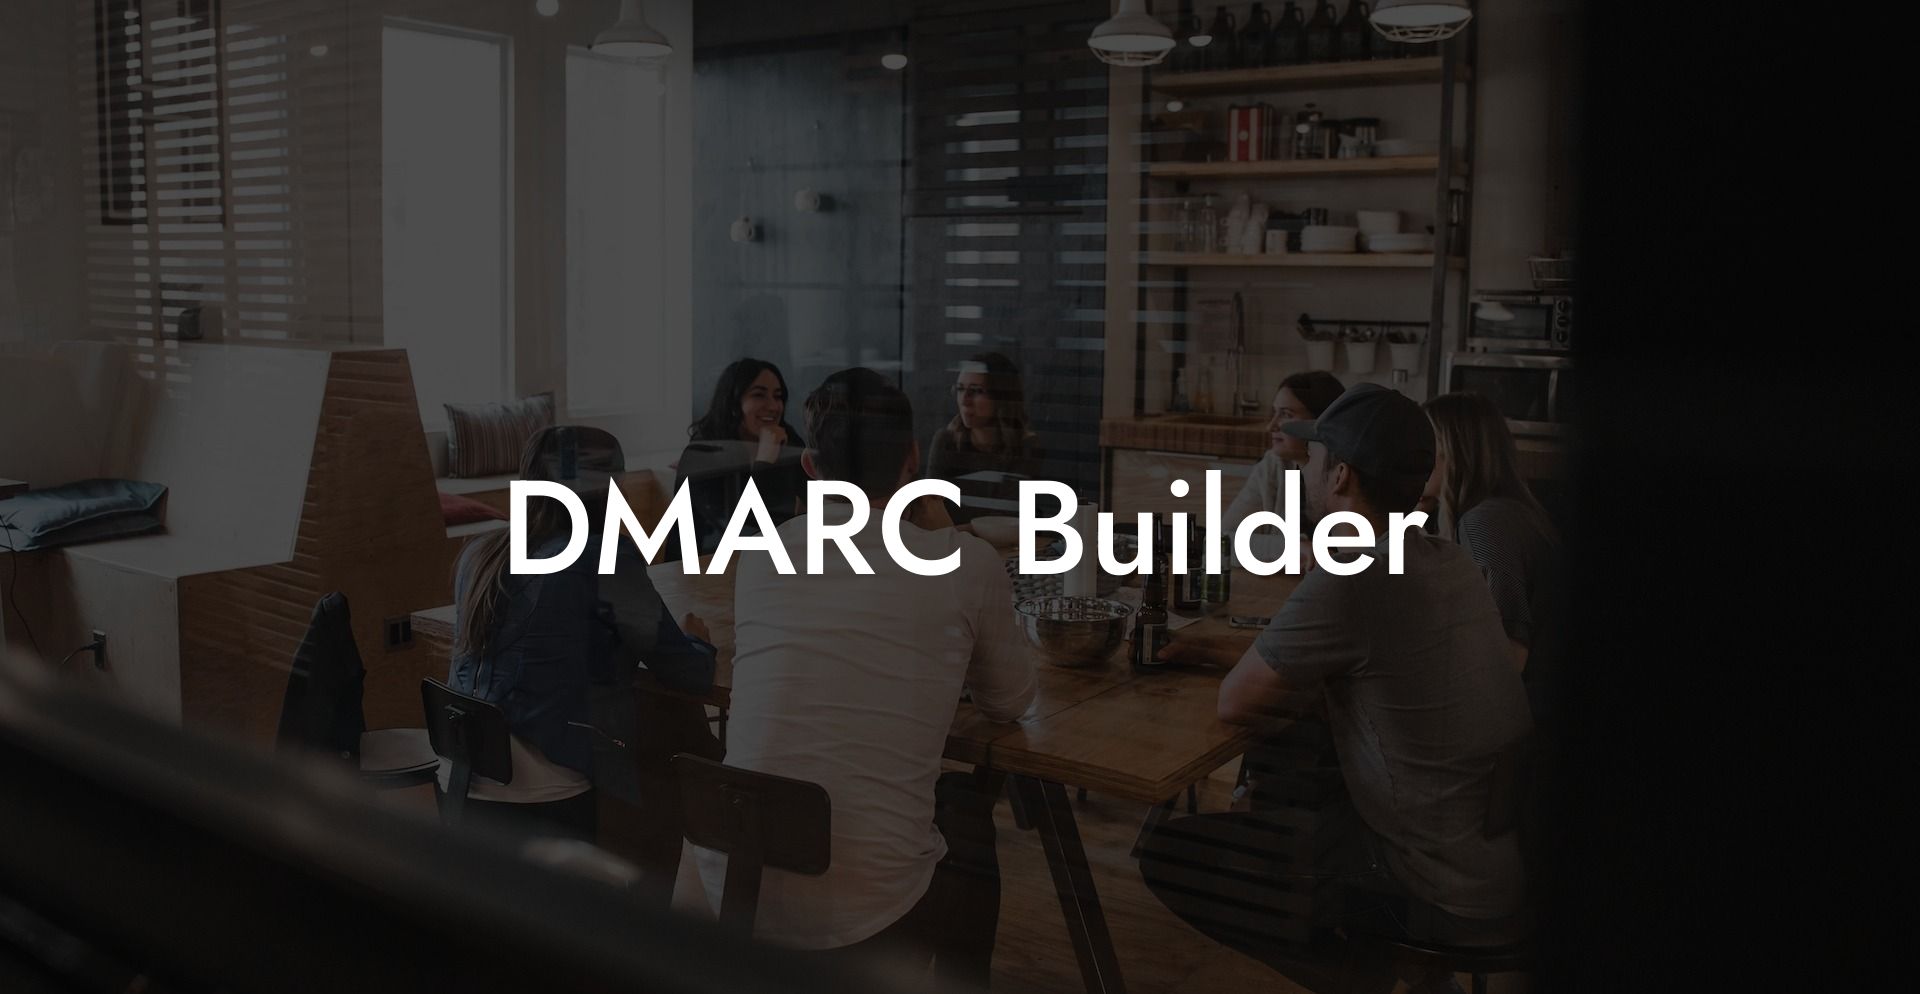 DMARC Builder